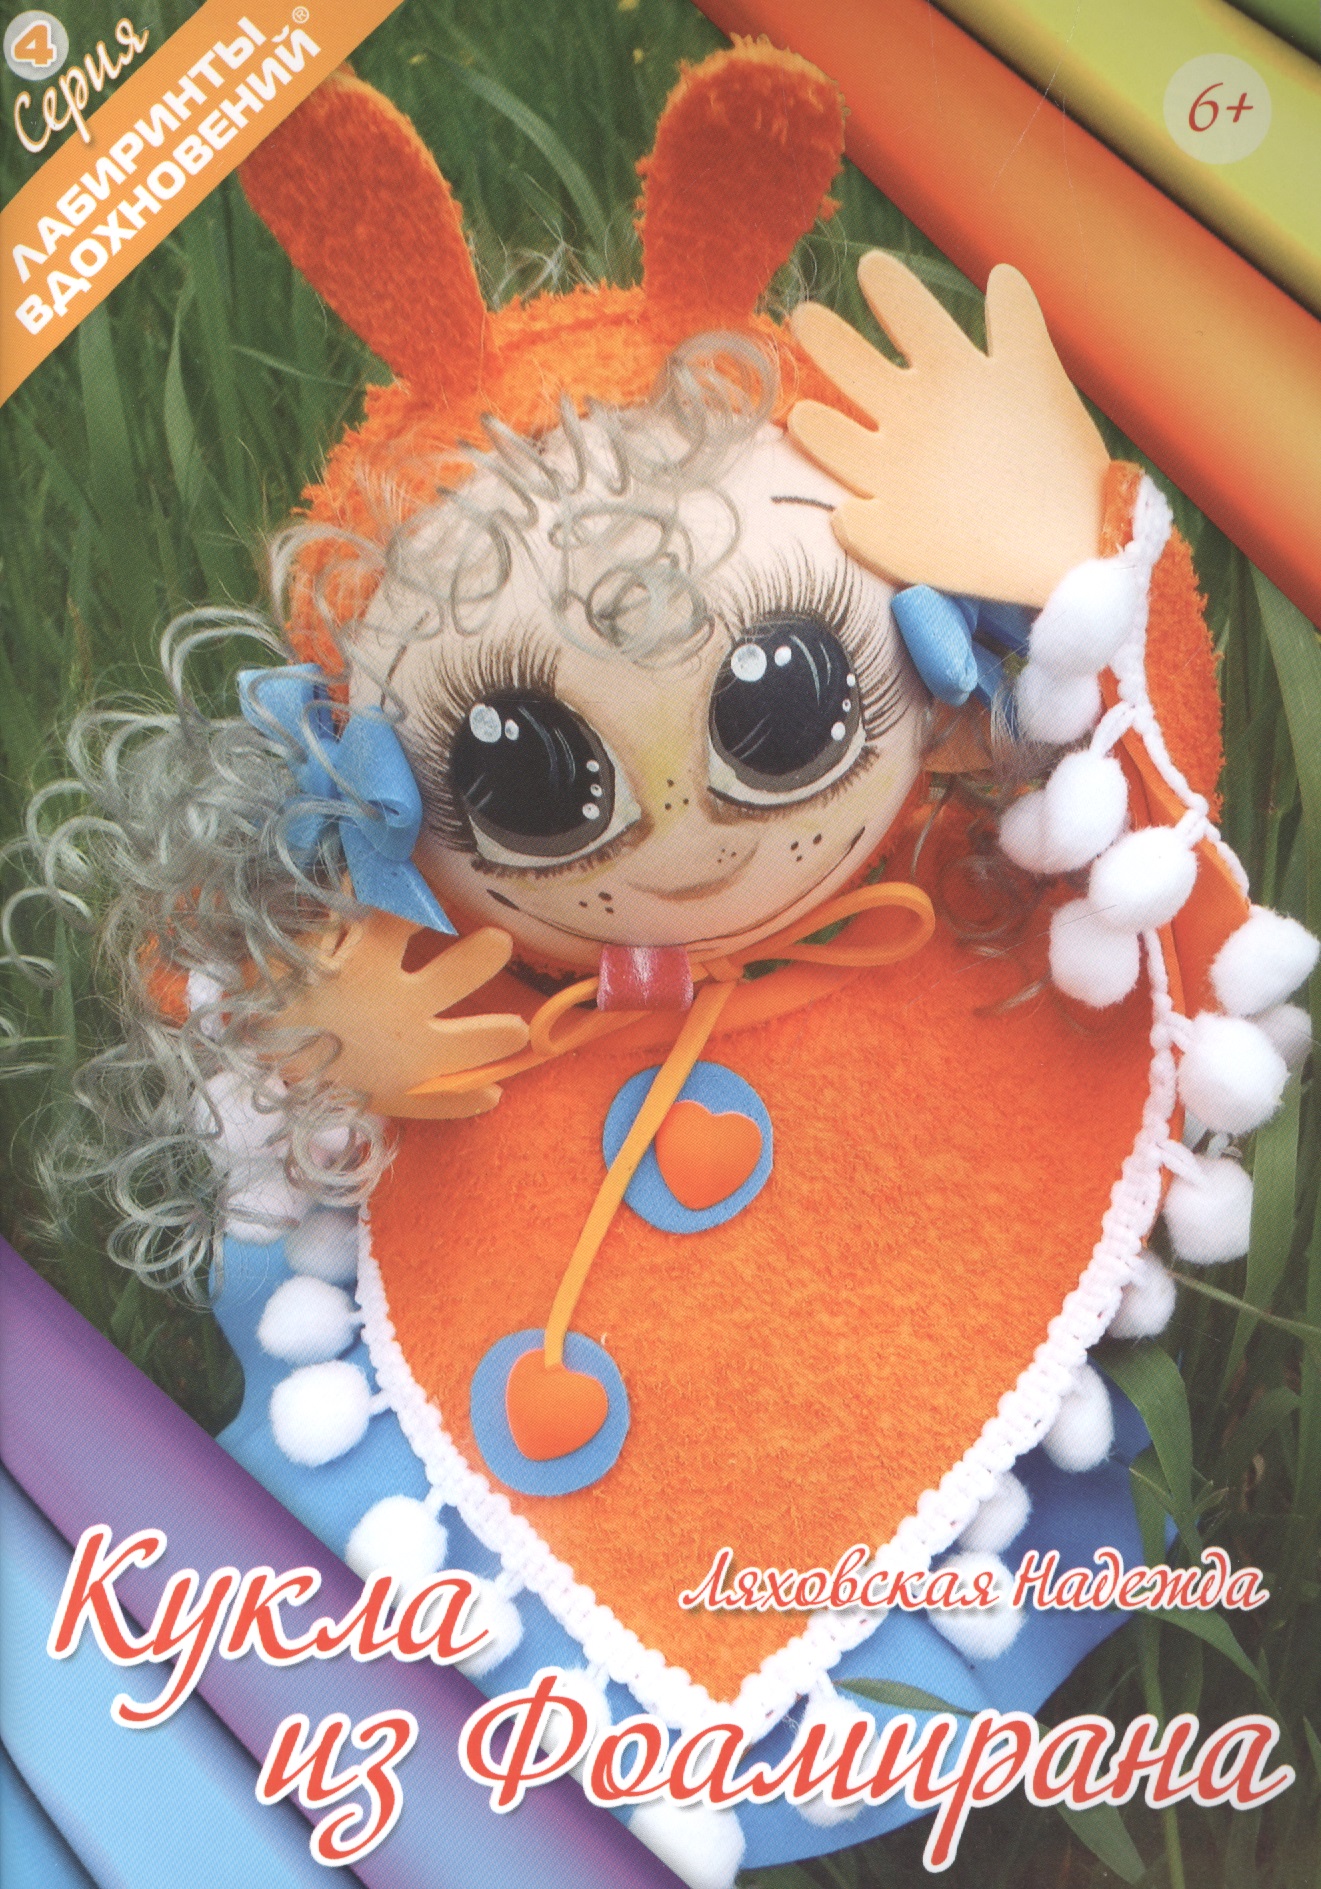 ляховская надежда кукла из фоамирана Кукла из фоамирана (6+) (мЛабВдох) Ляховская